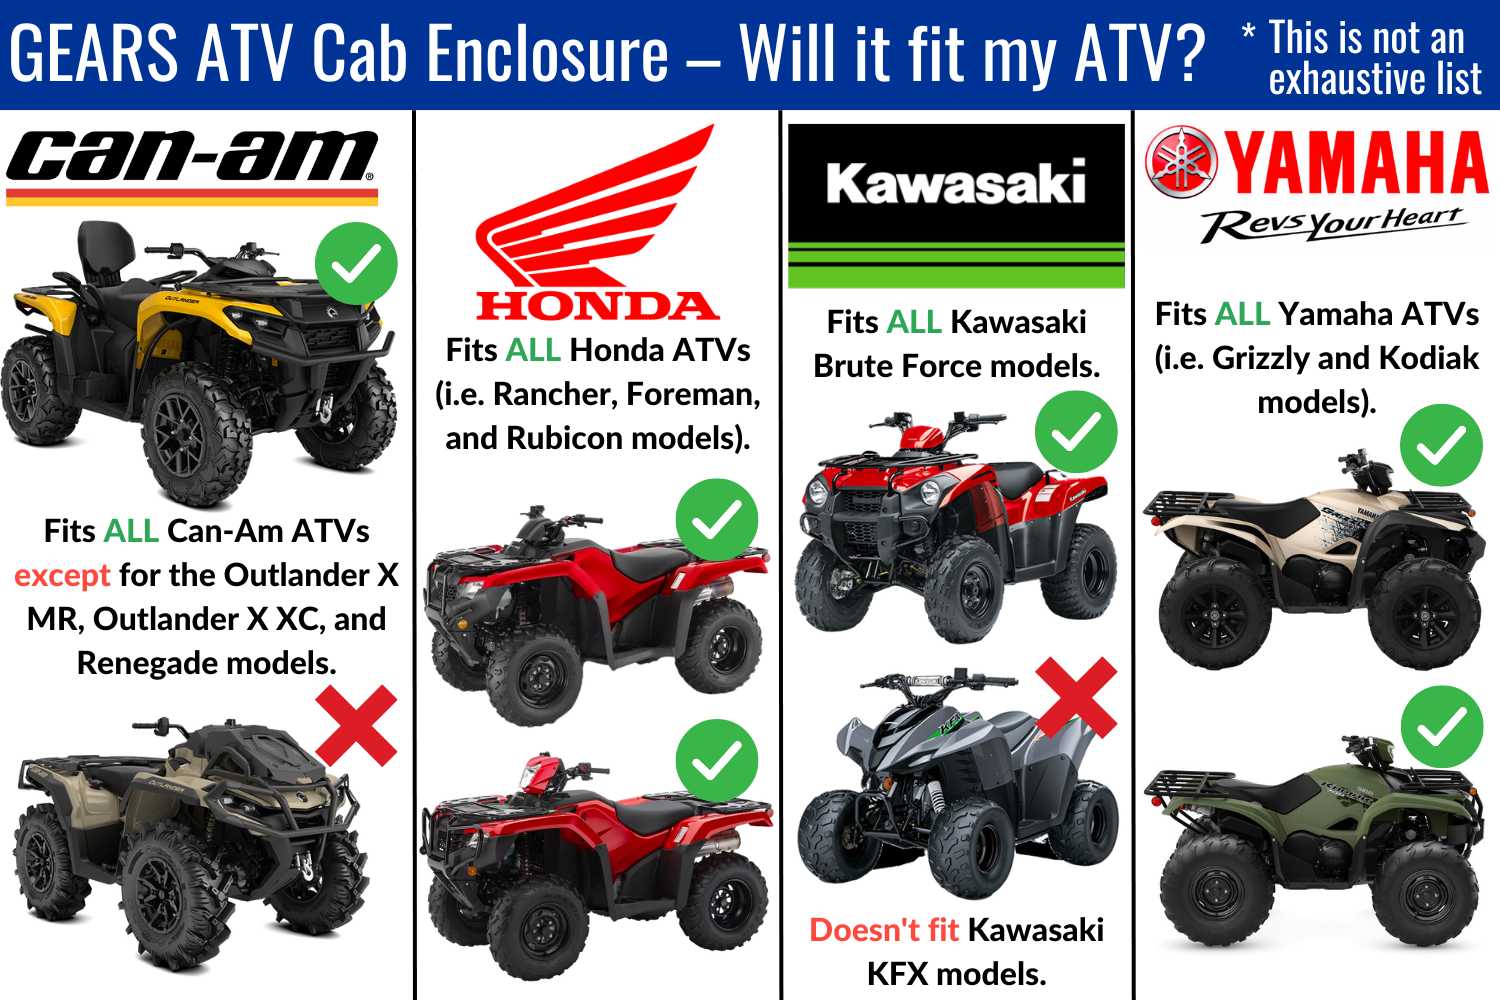 ATV Cab Enclosure (Cabin Cover)